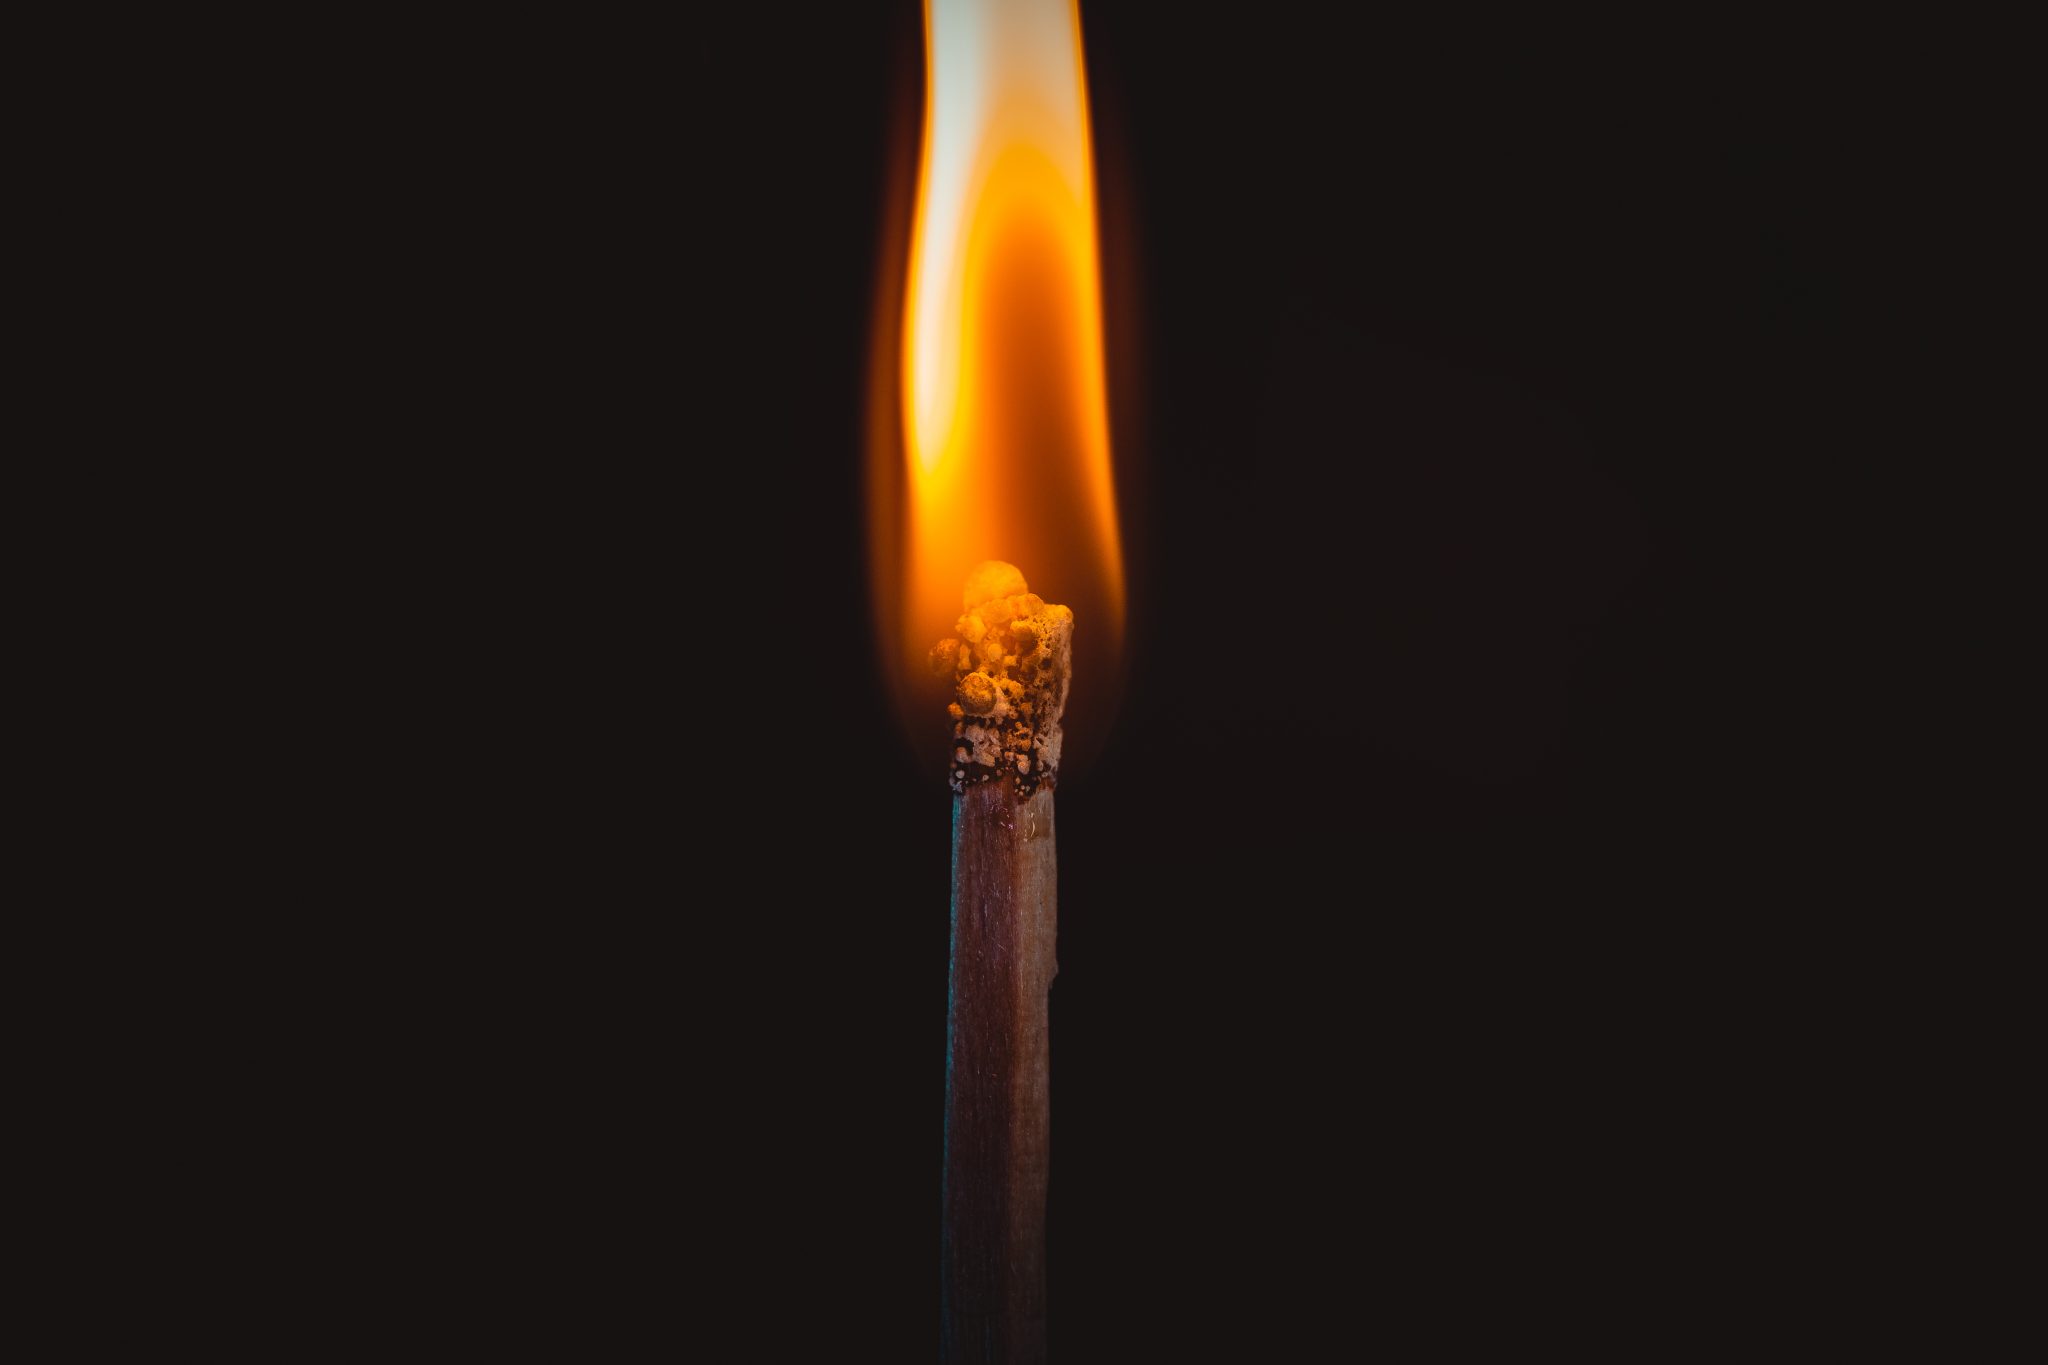 Burning, Flame, Fire, Match, Matchstick, Wood, Igniting